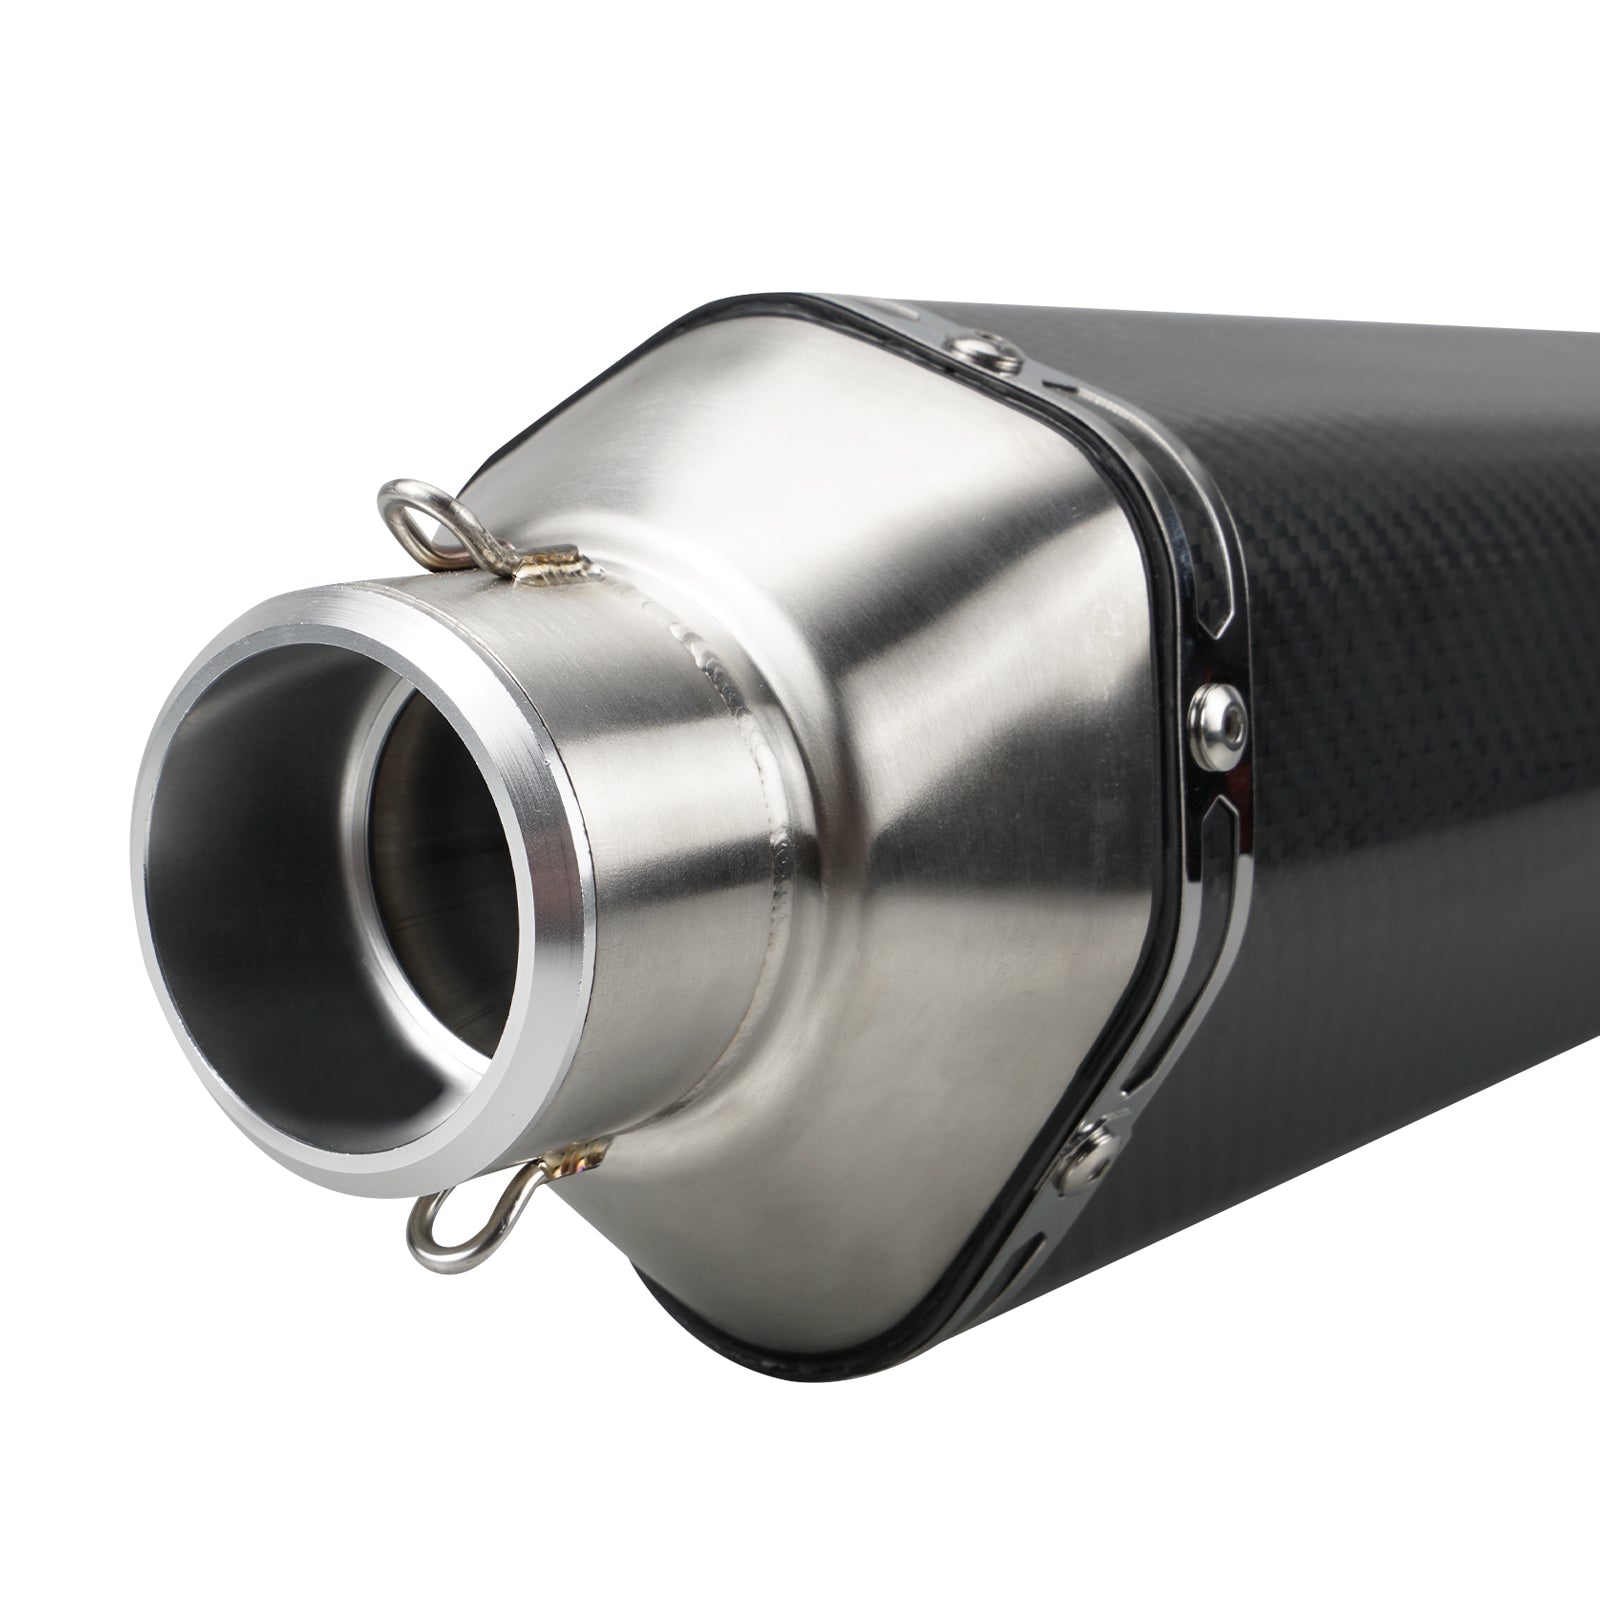 Universal 38/51/60.5mm Motorcycle ATV Exhaust Muffler Tail Pipe Adapter Kit Carbon Fiber